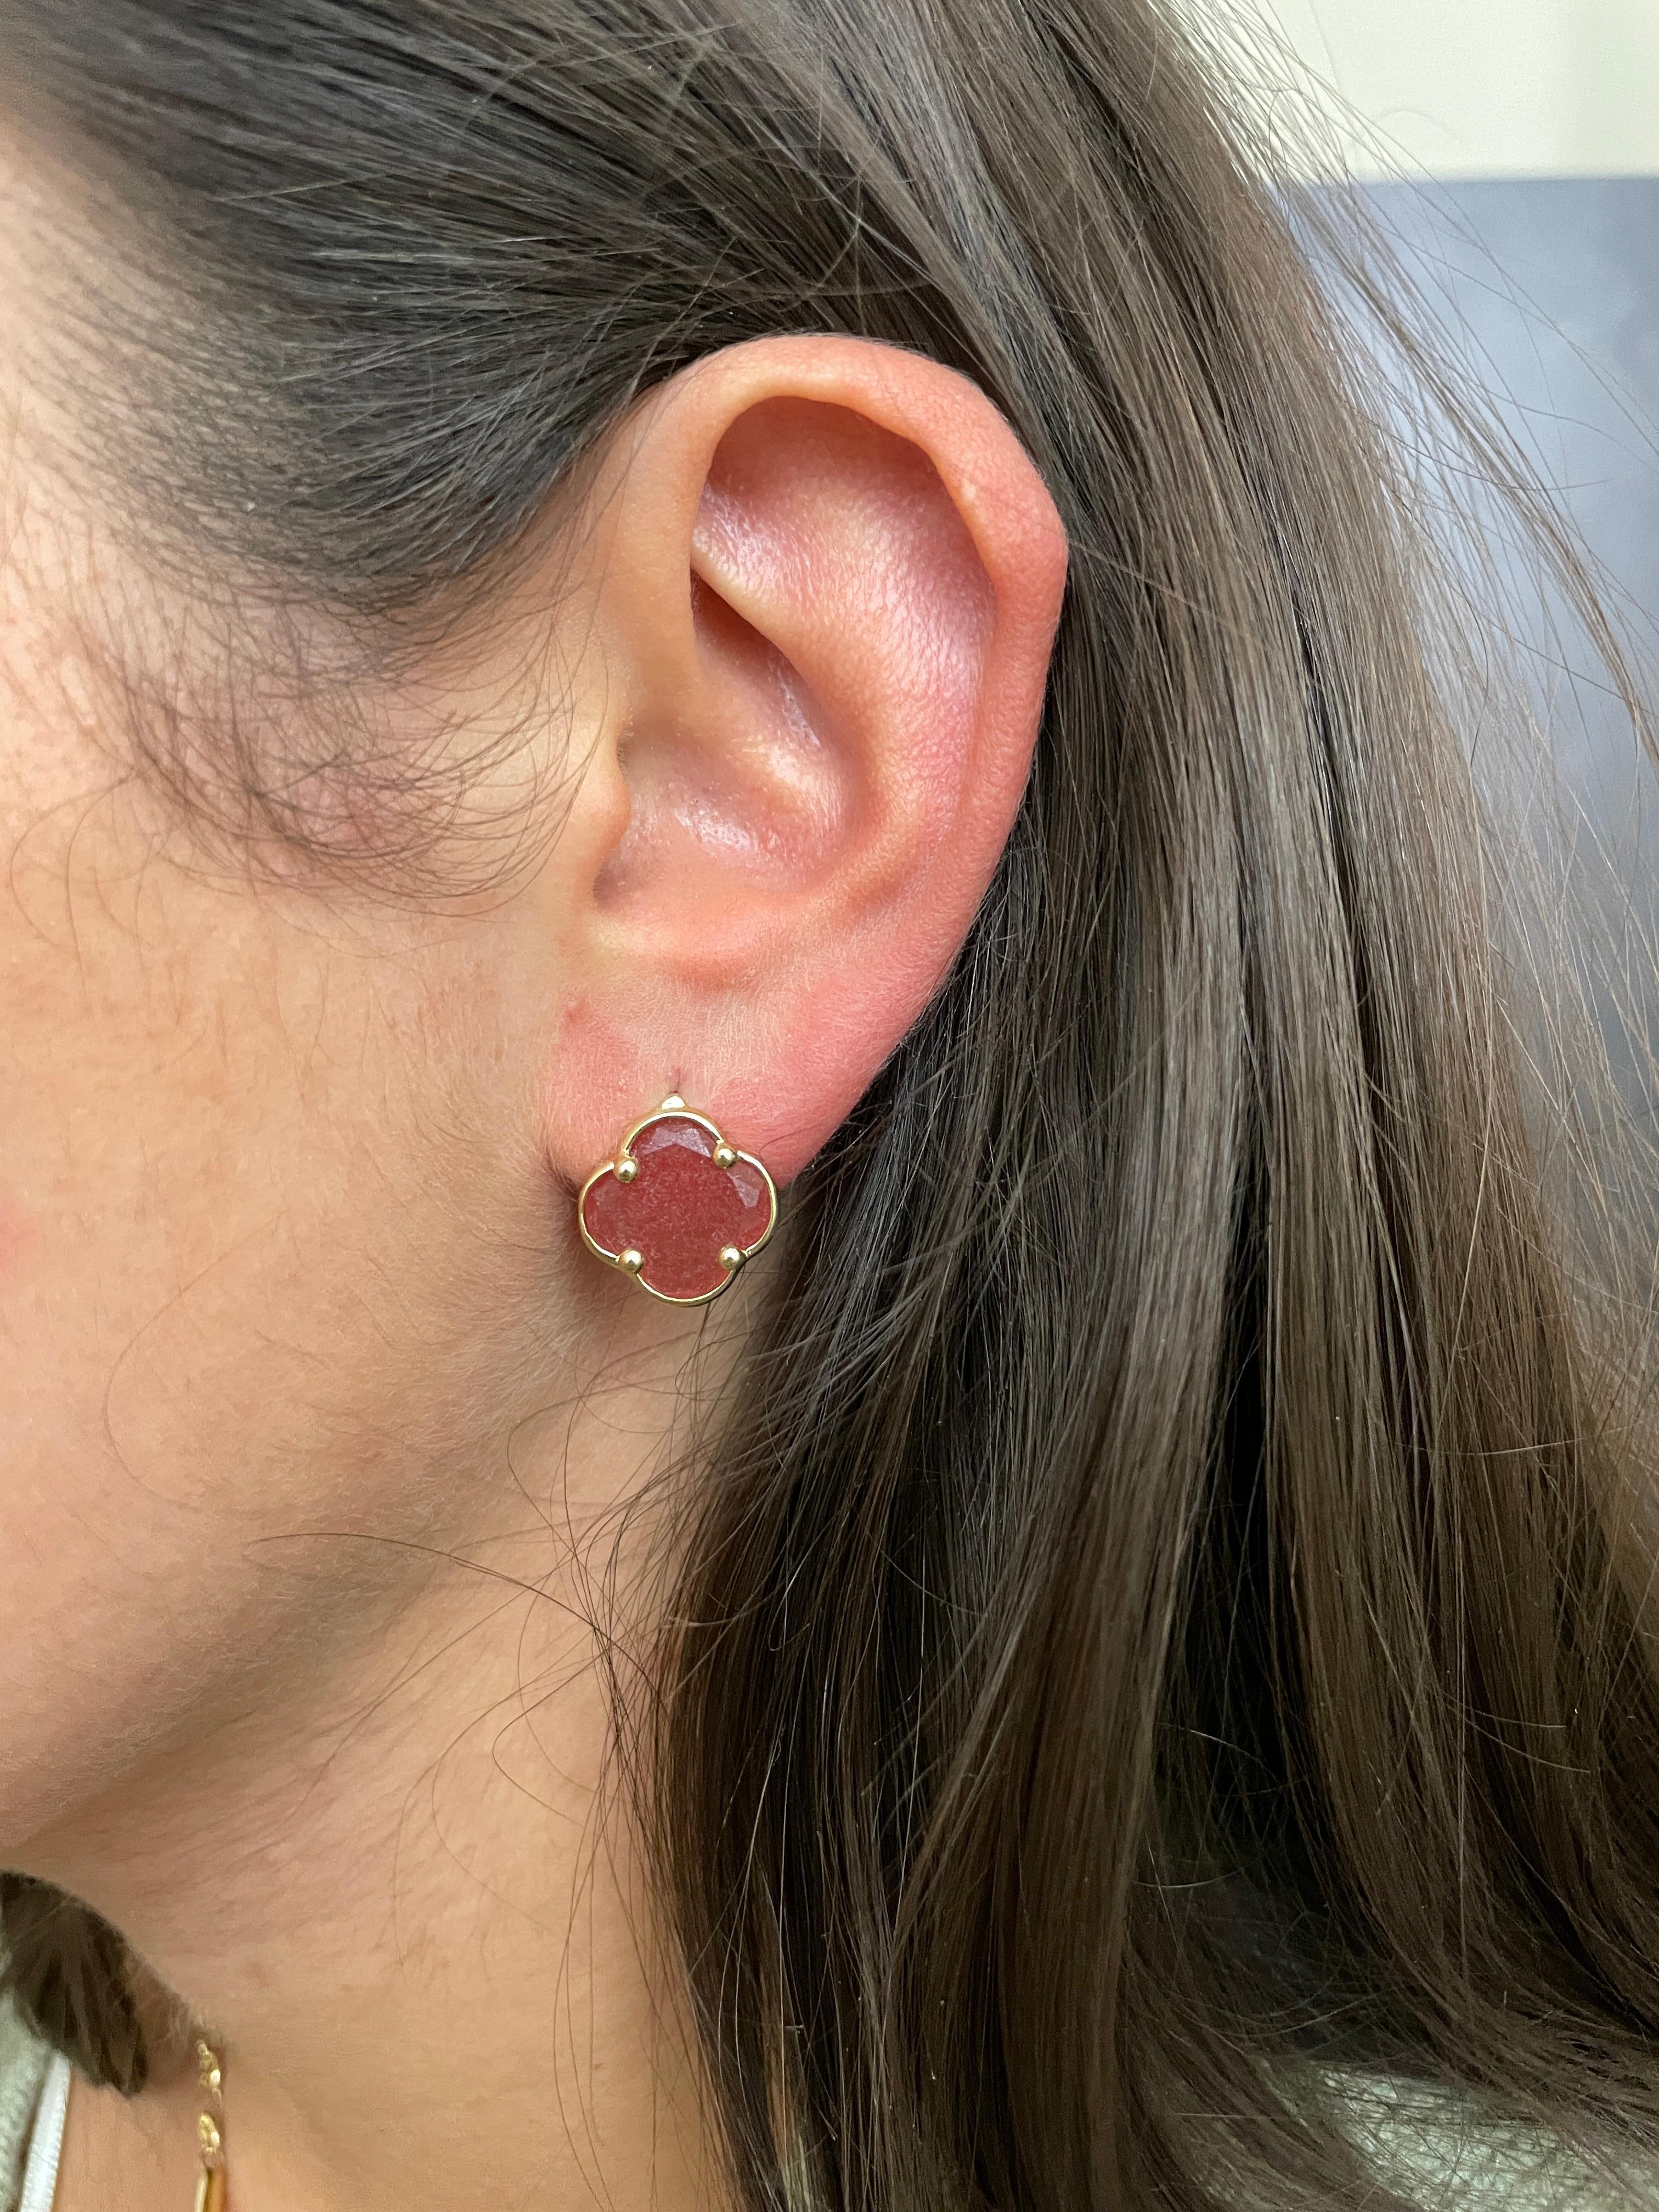 clover shape earrings